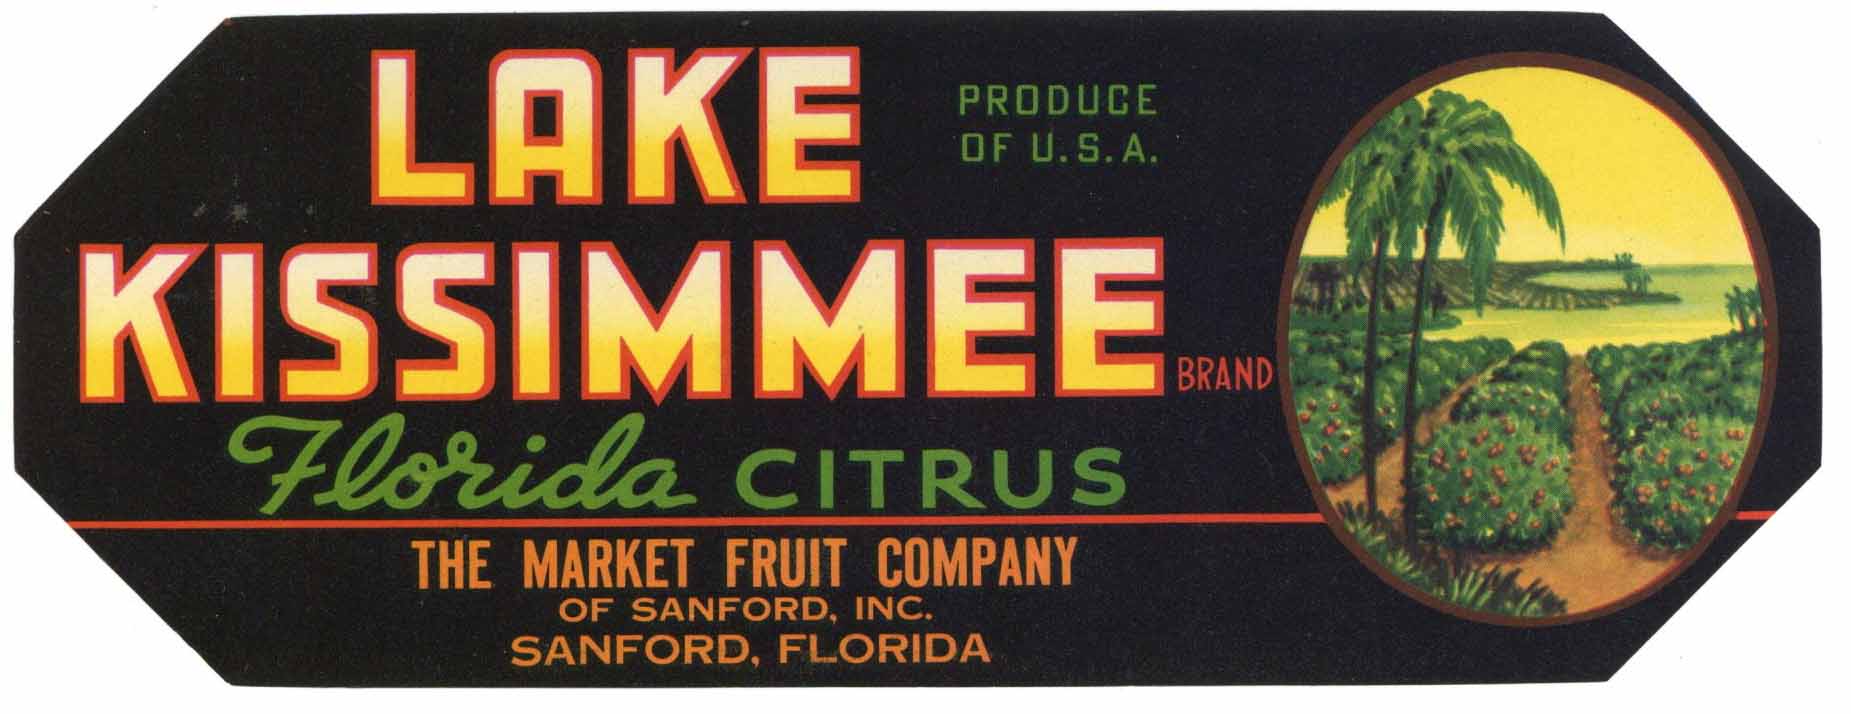 Lake Kissimmee Brand Vintage Sanford Florida Citrus Crate Label